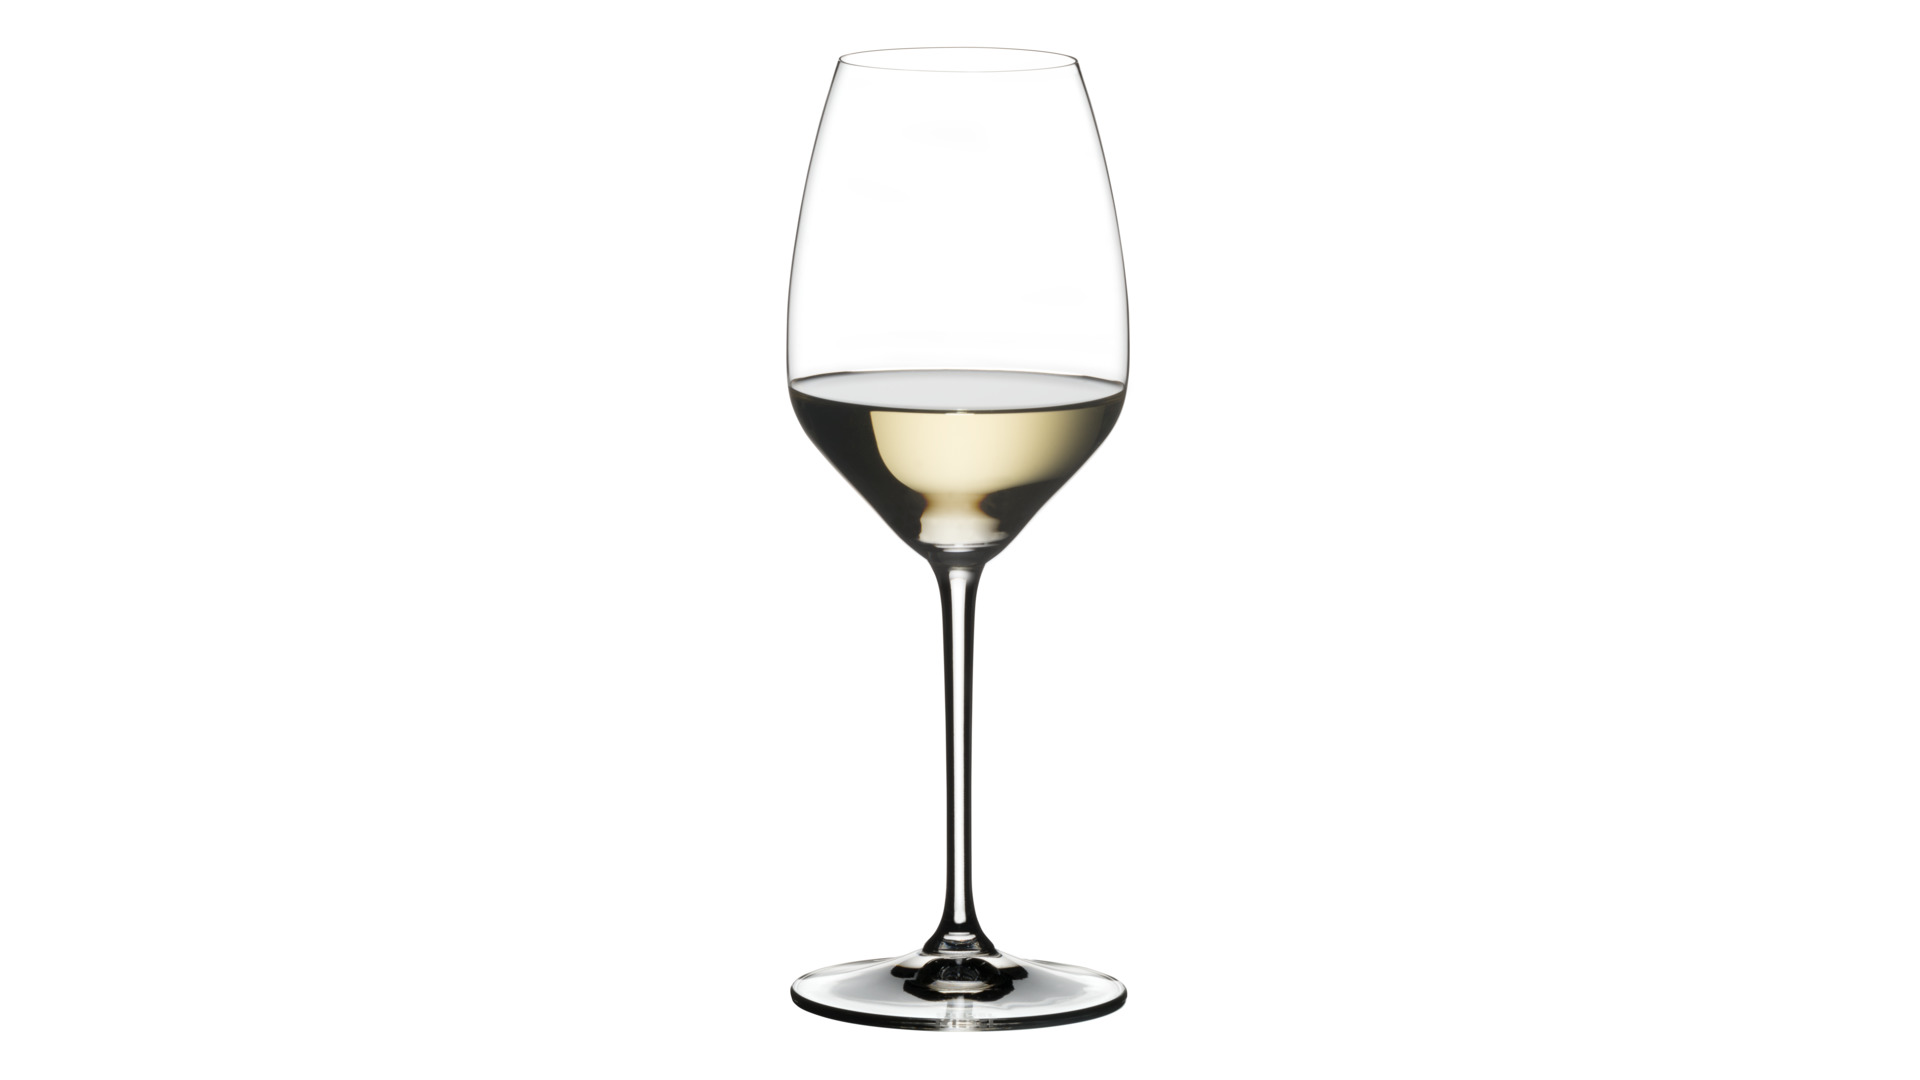 Набор бокалов для белого вина Riedel Extreme Riesling 490 мл, 4 шт, стекло хрустальное